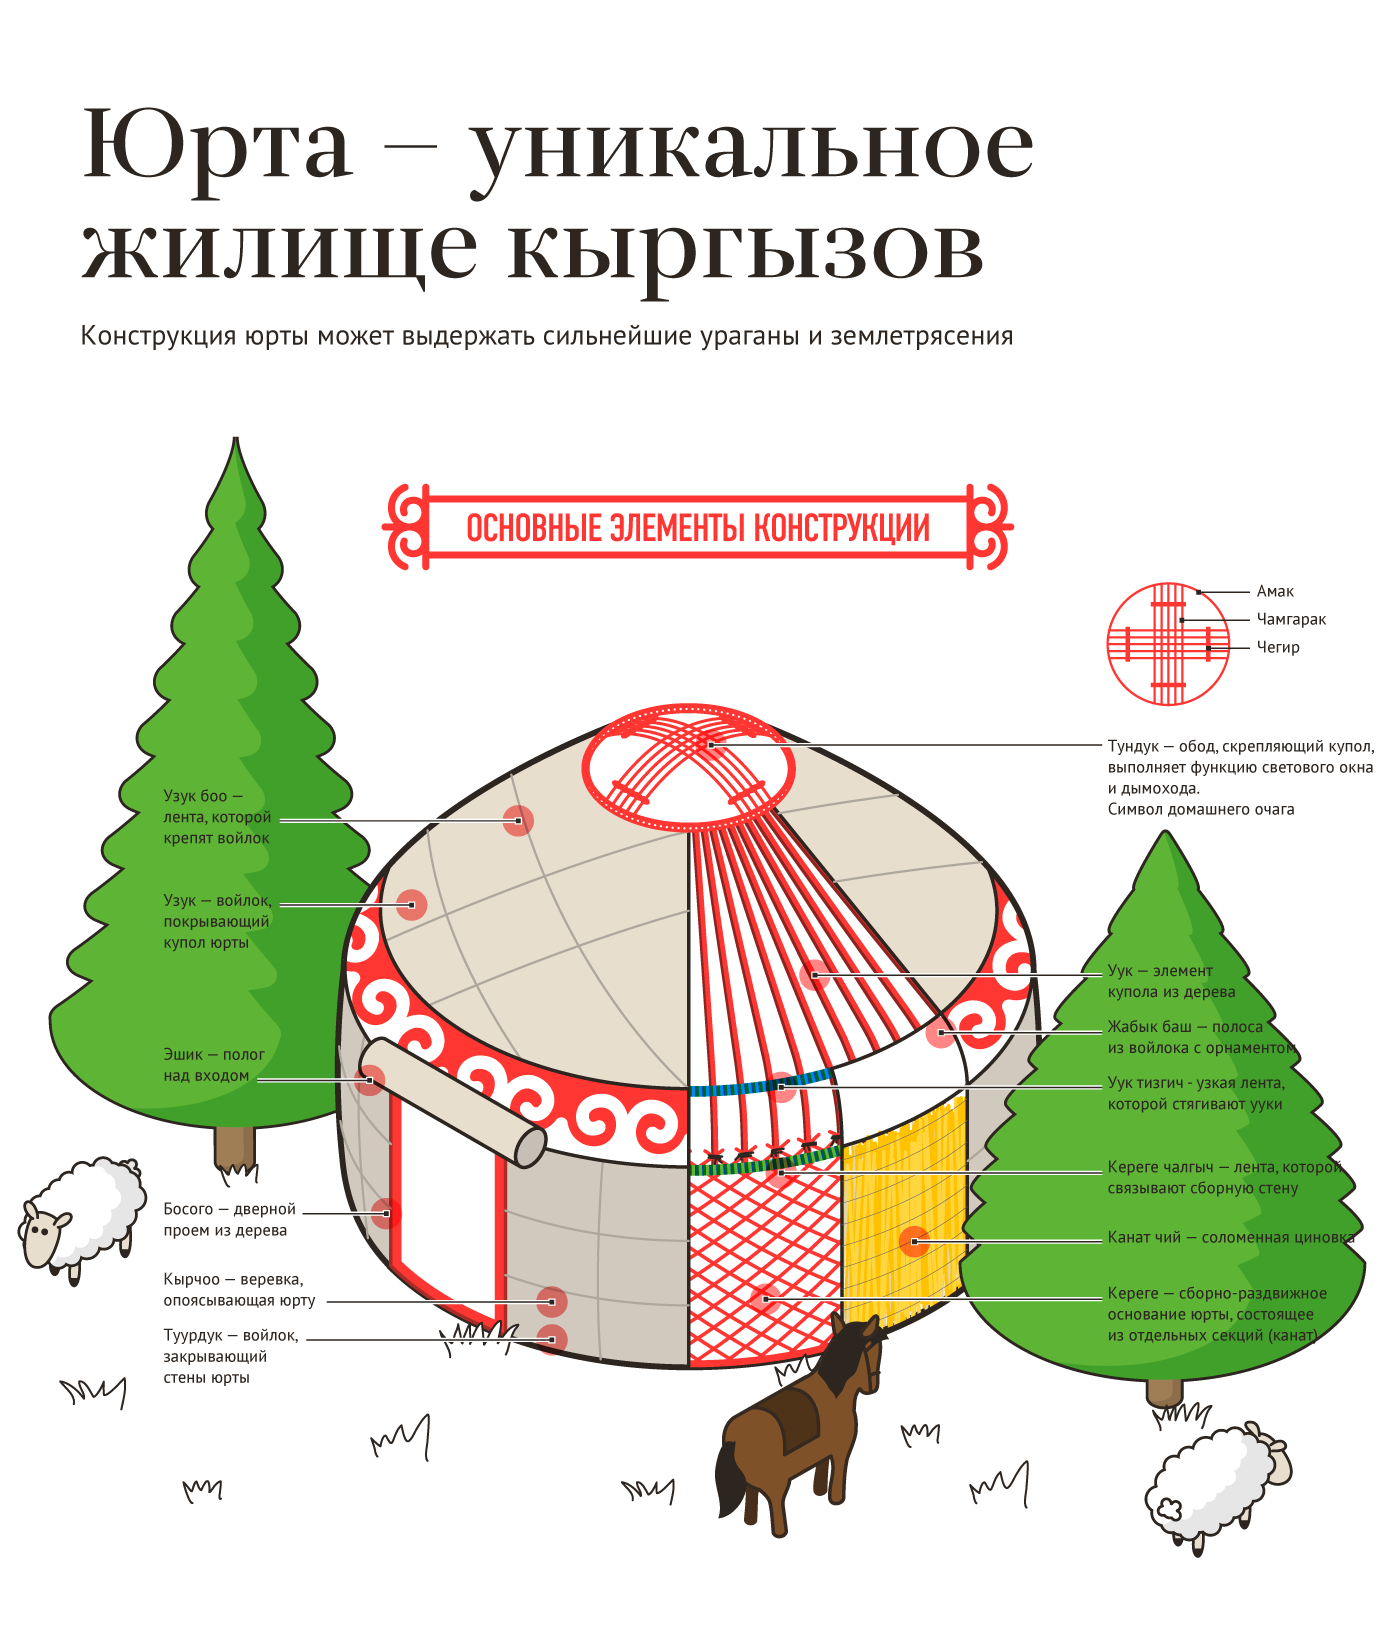 infographics information architecture  yurt nomad kyrgyzstan инфографика юрта Кыргызстан